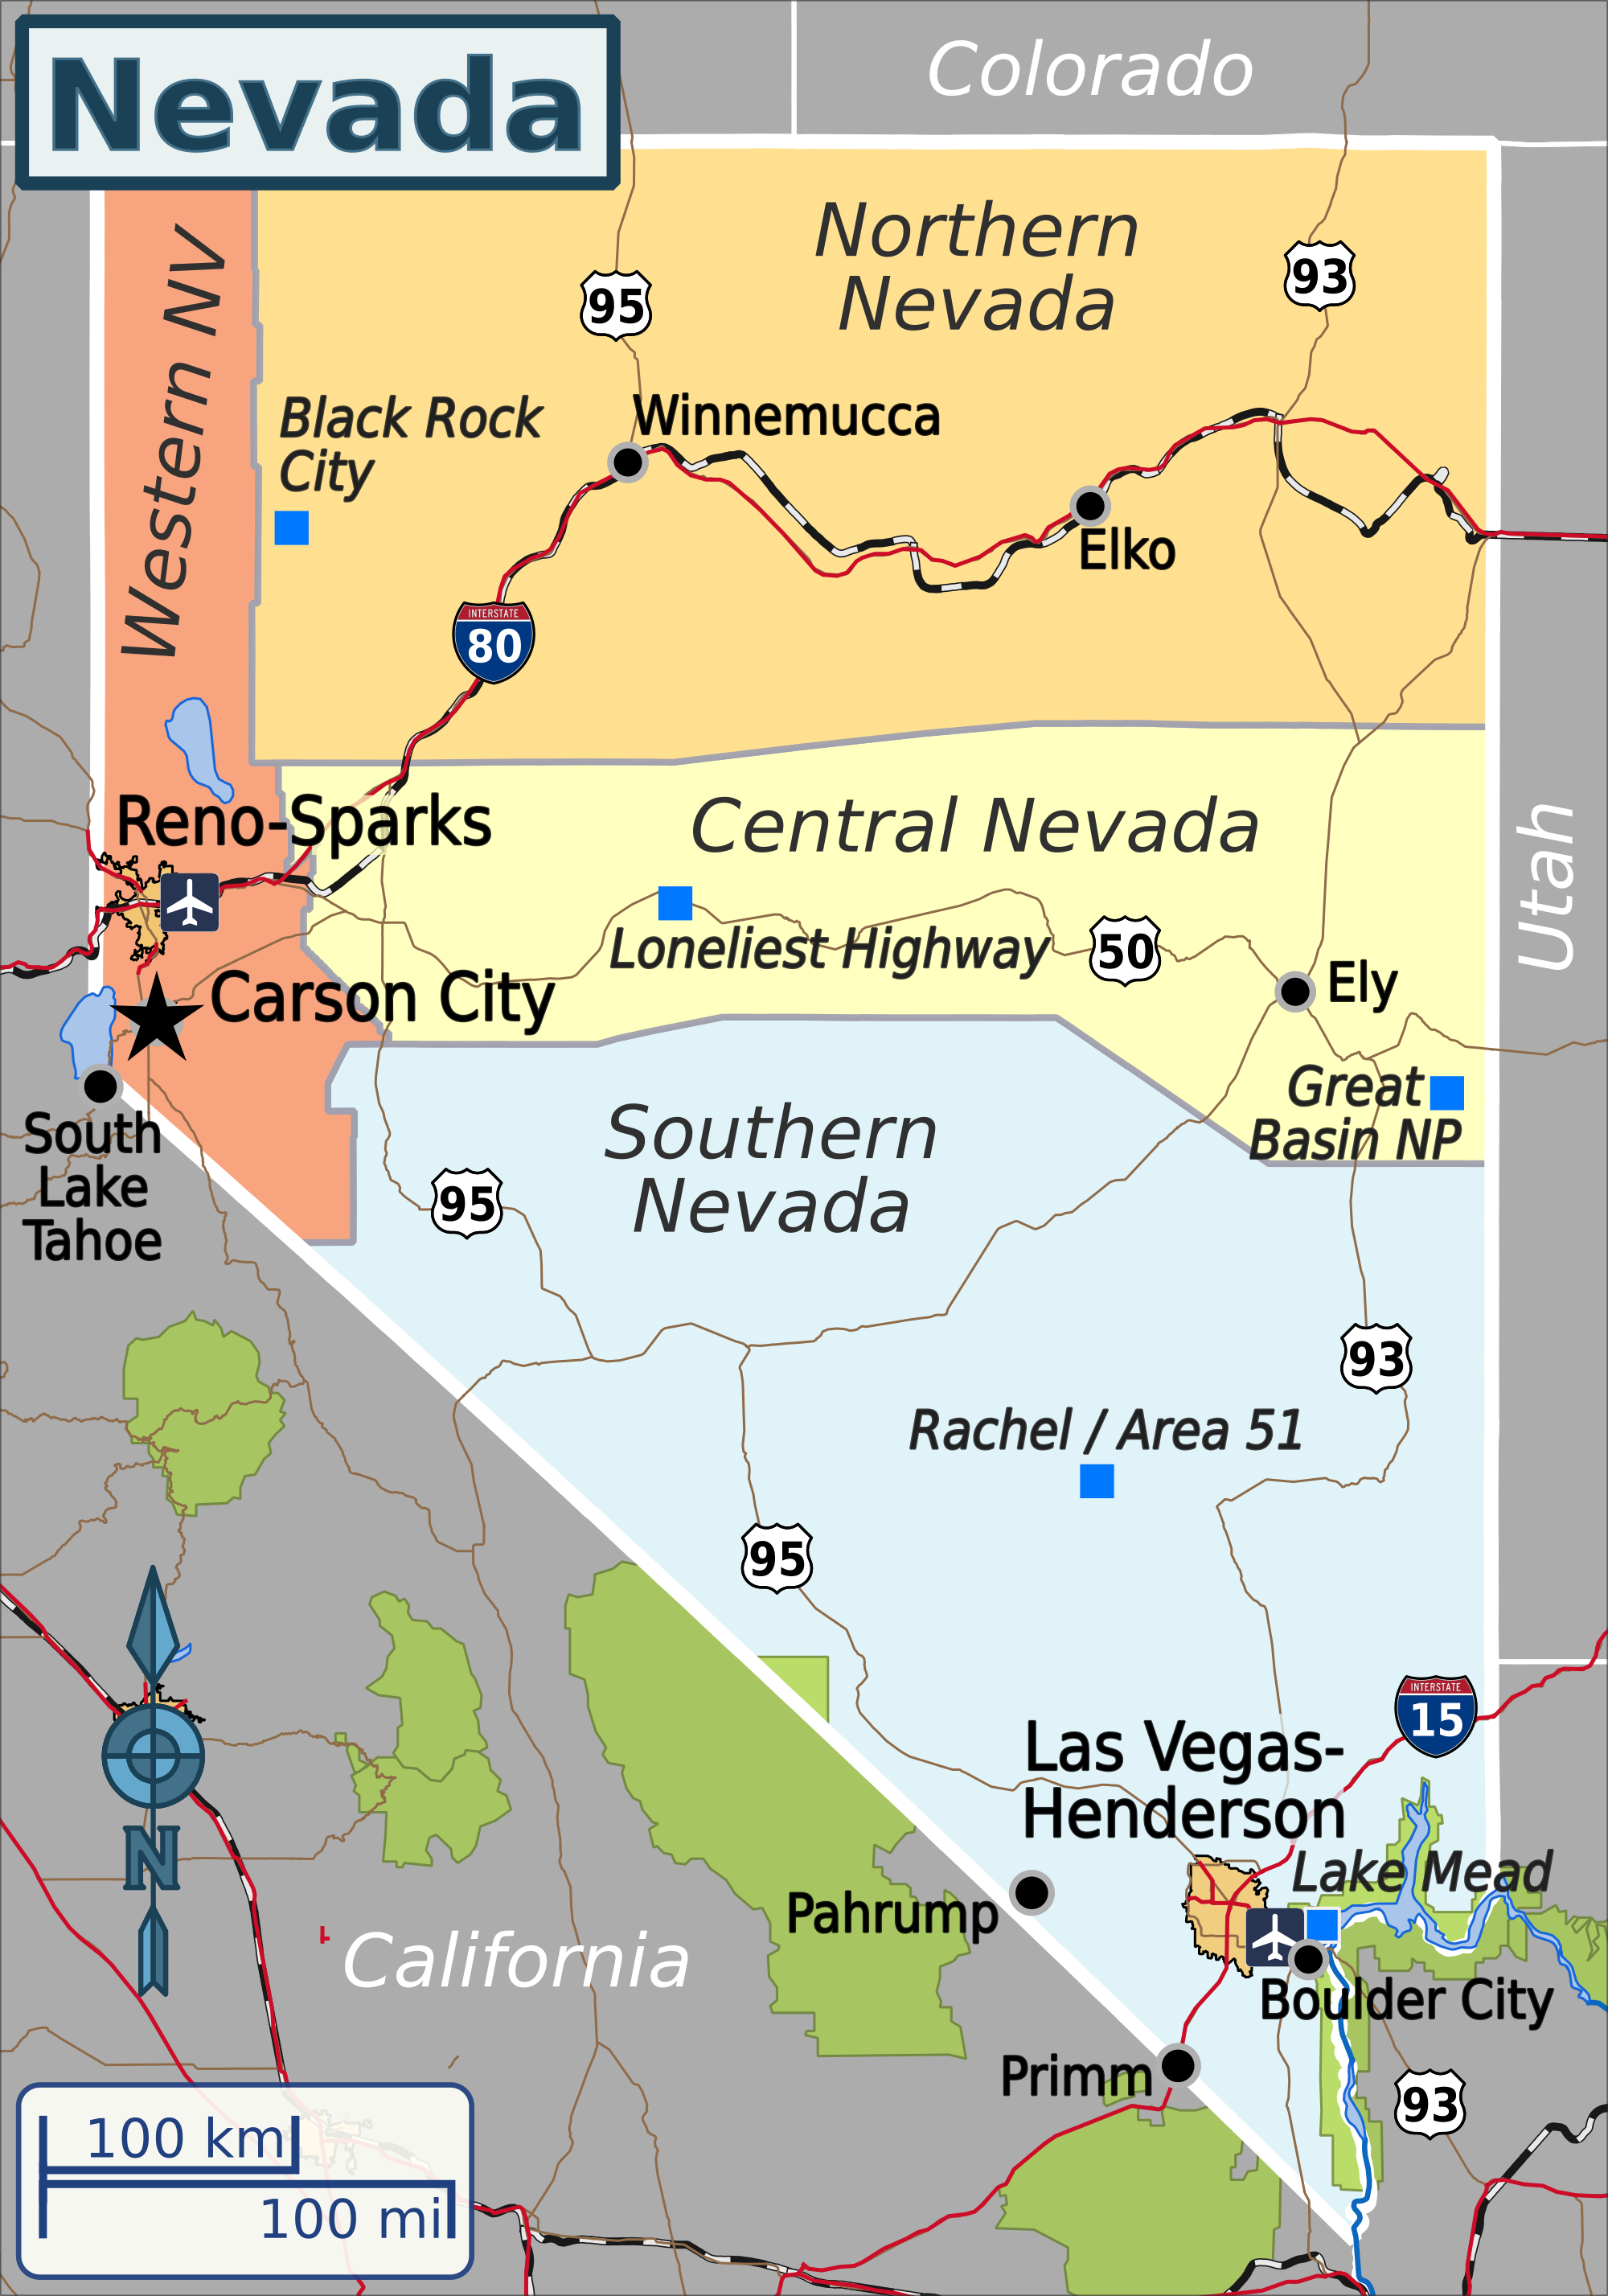 USA Nevada SPG Family Adventure Network